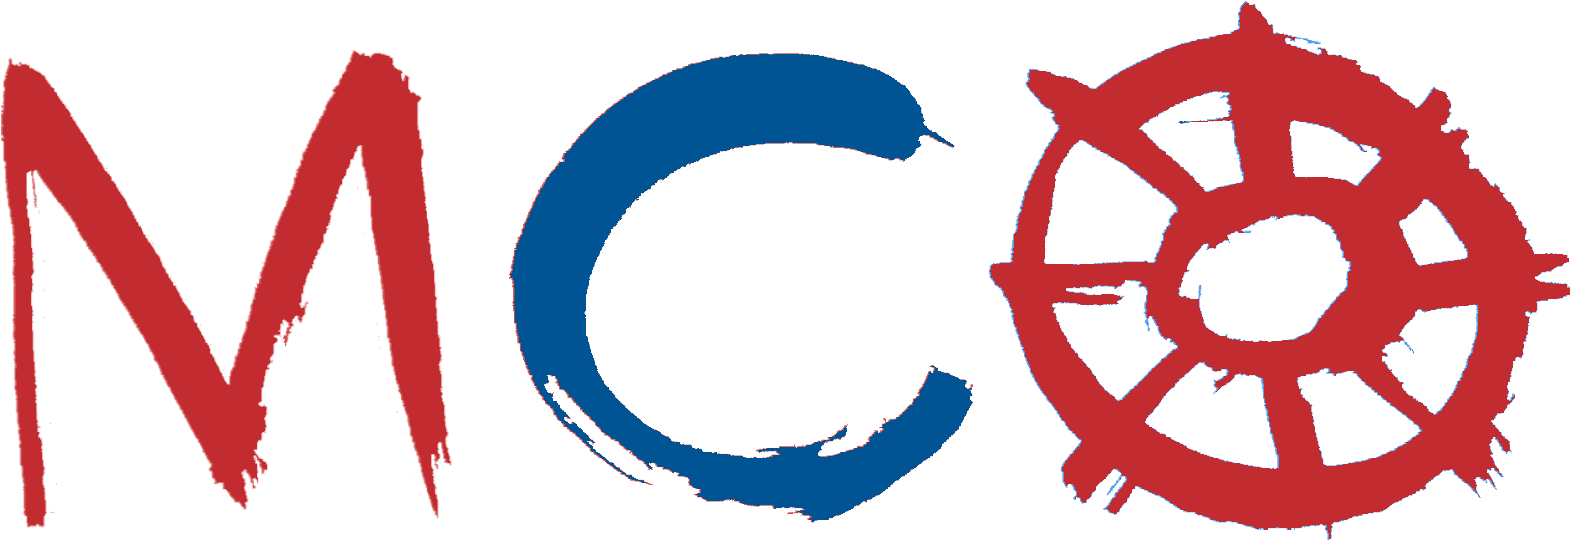 Mongolian Chamberof Commerce Logo PNG image